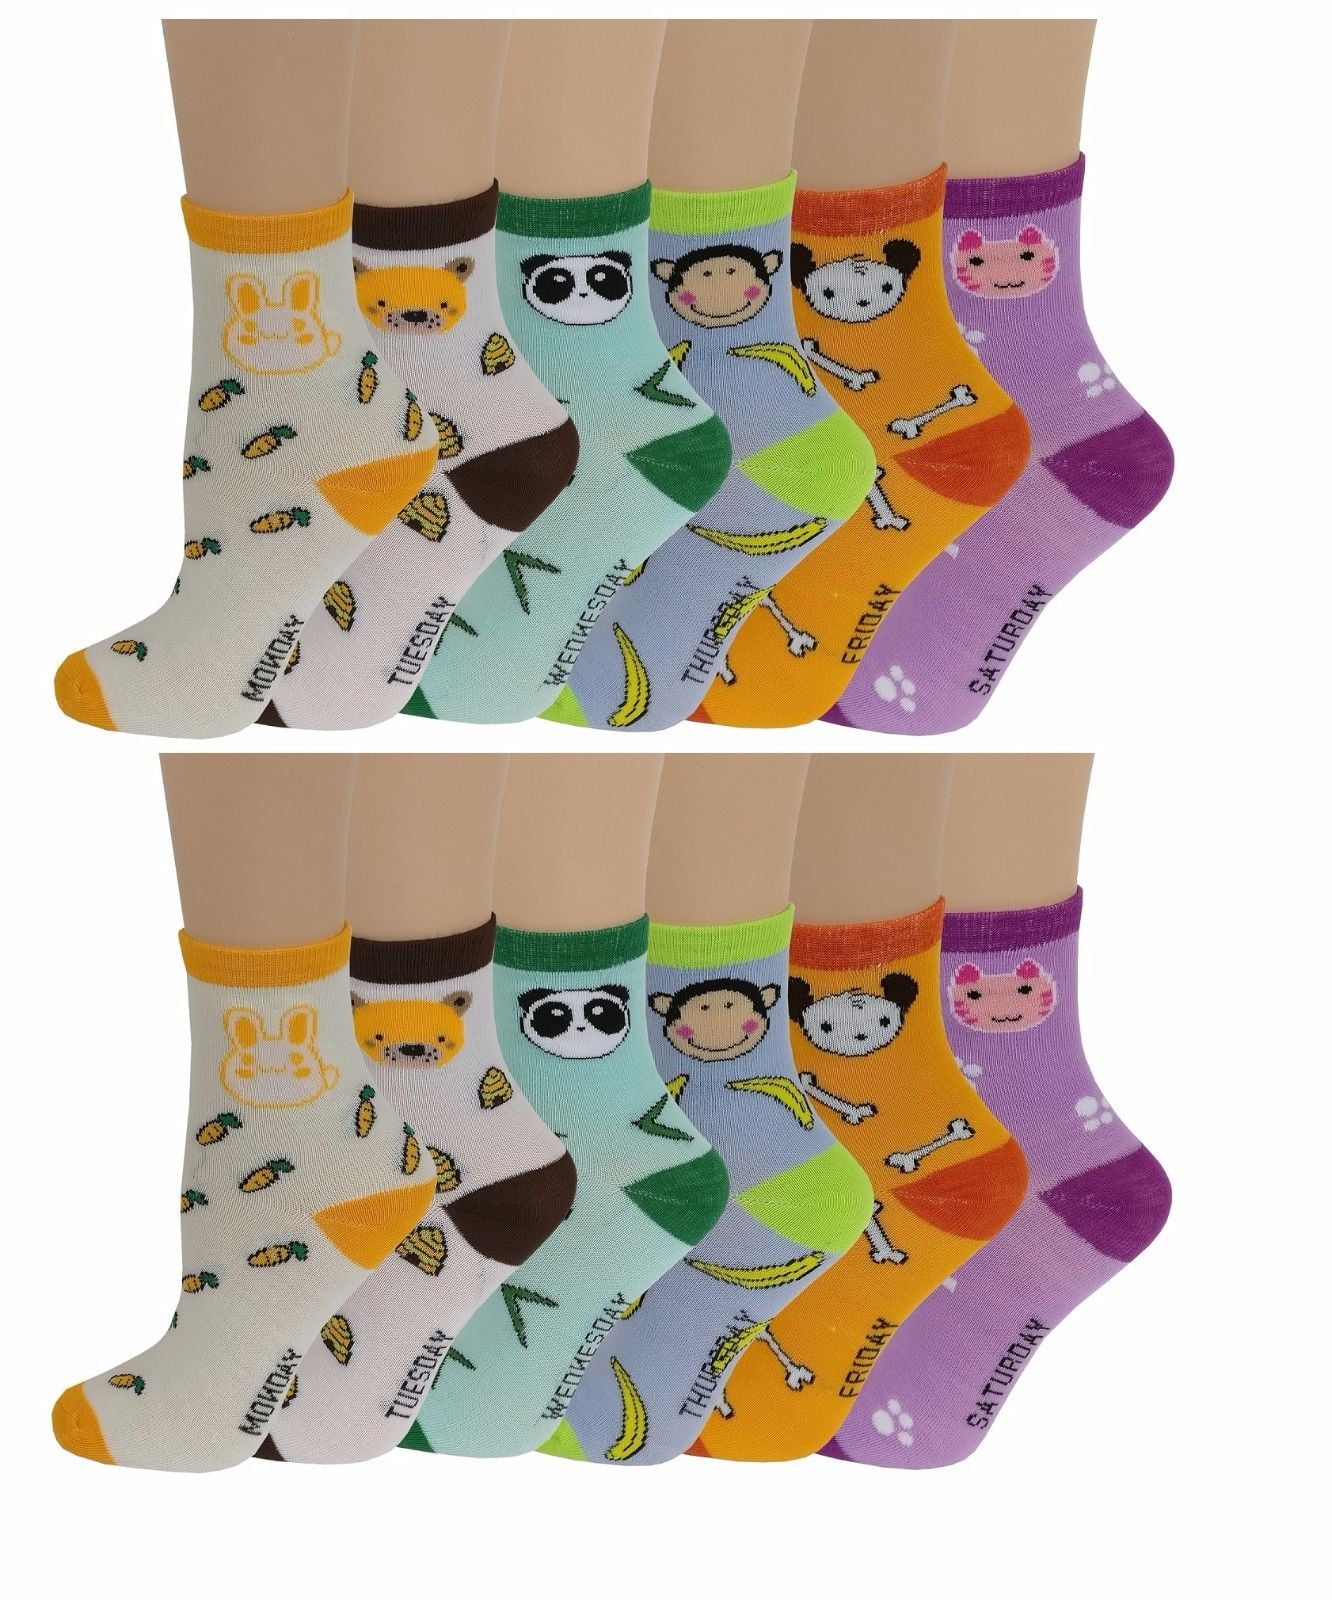 Ayla 12 Pairs Pack Kids Girls Colorful Creative Fun Novelty Design Crew Socks 